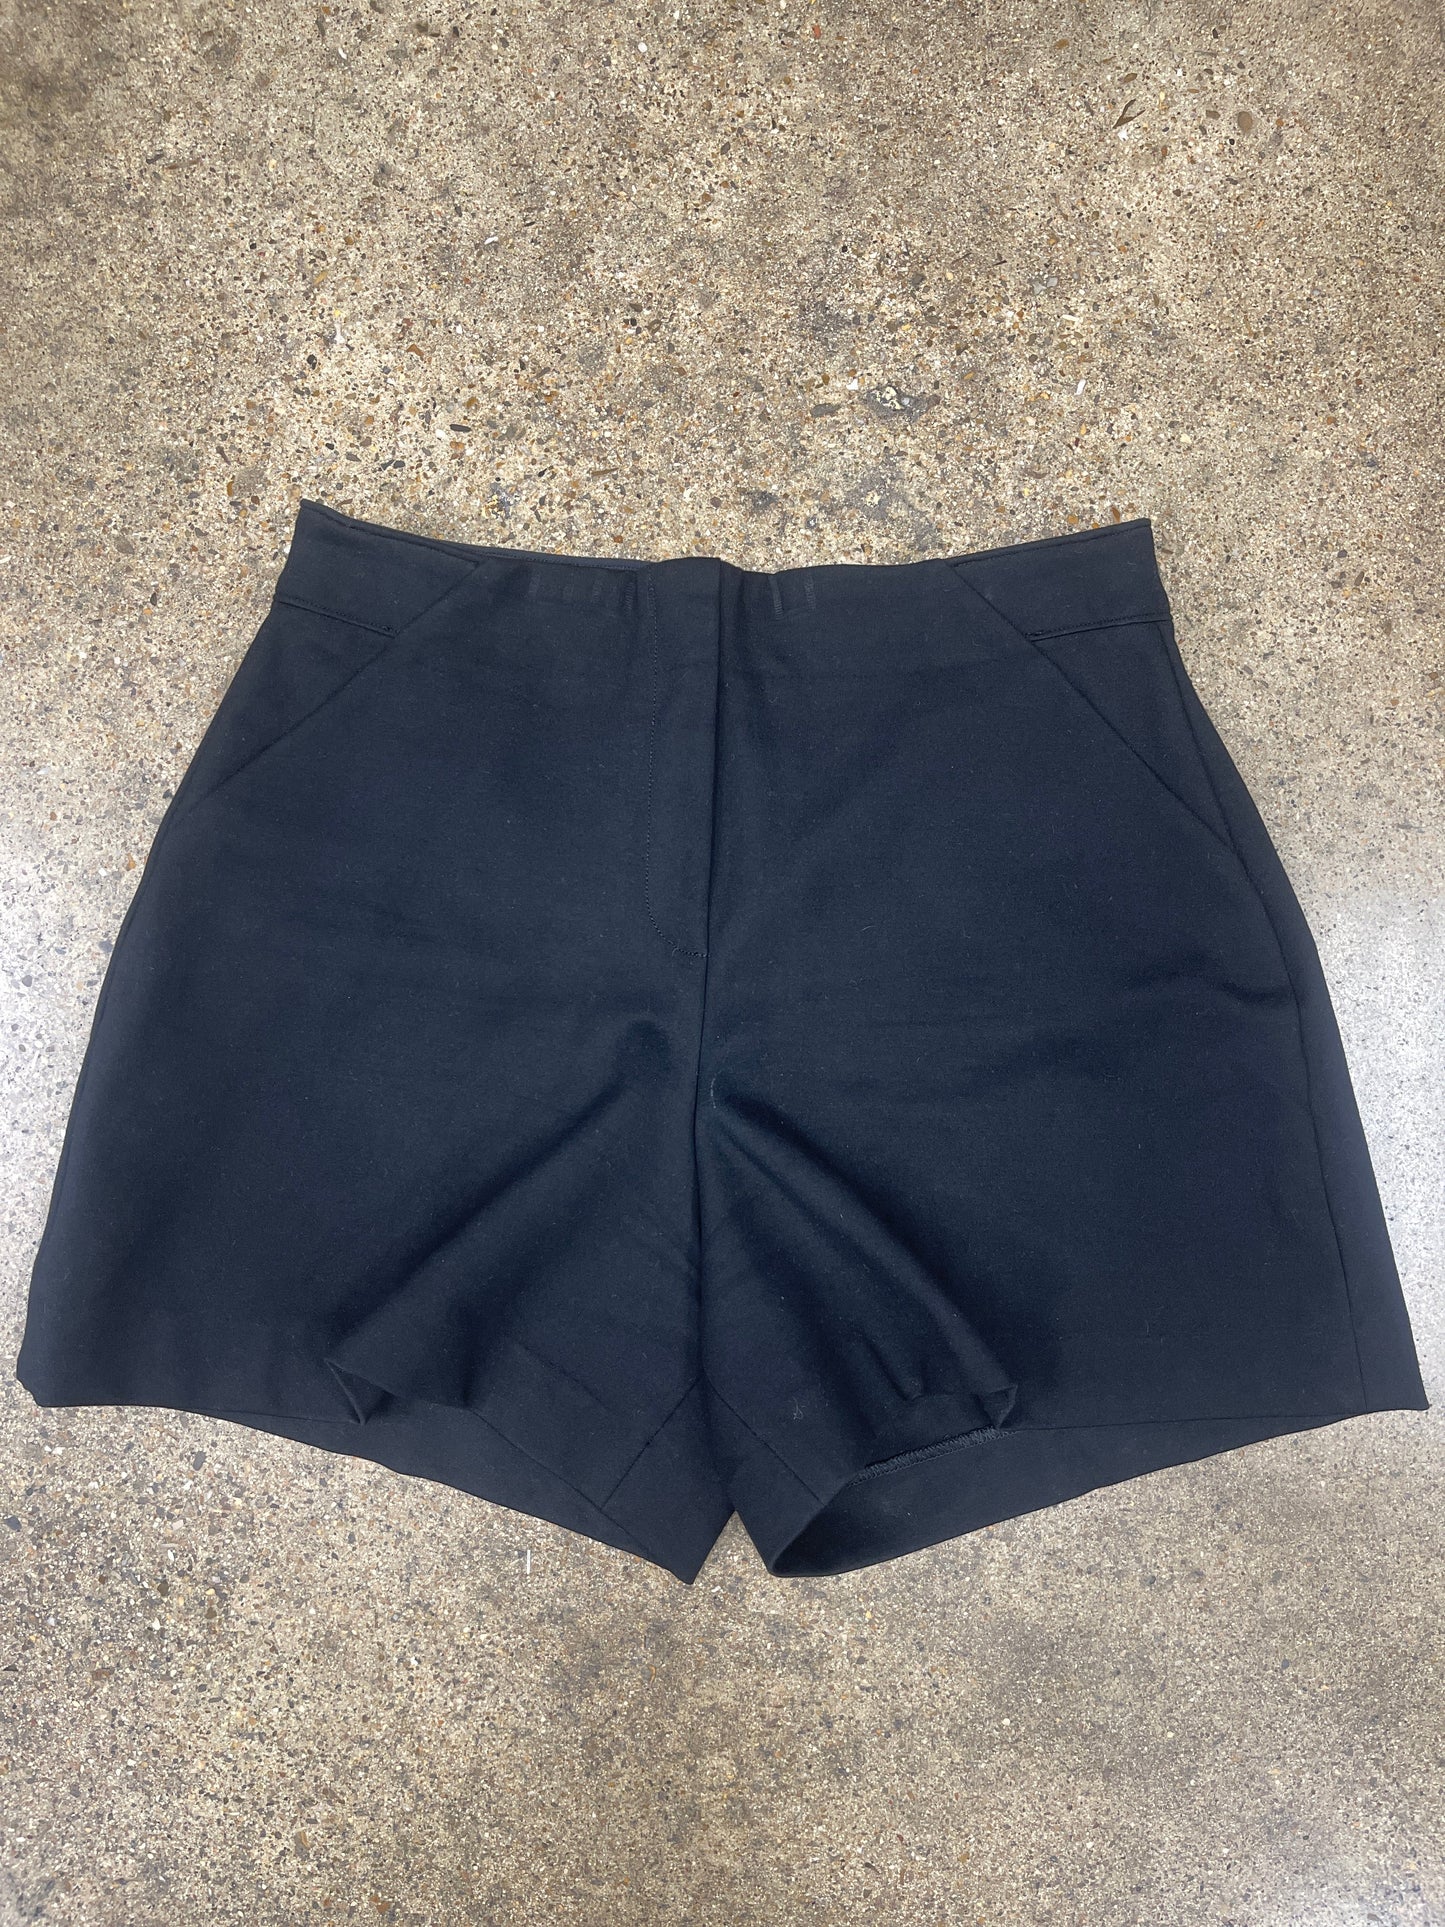 Black Shorts Spanx, Size M